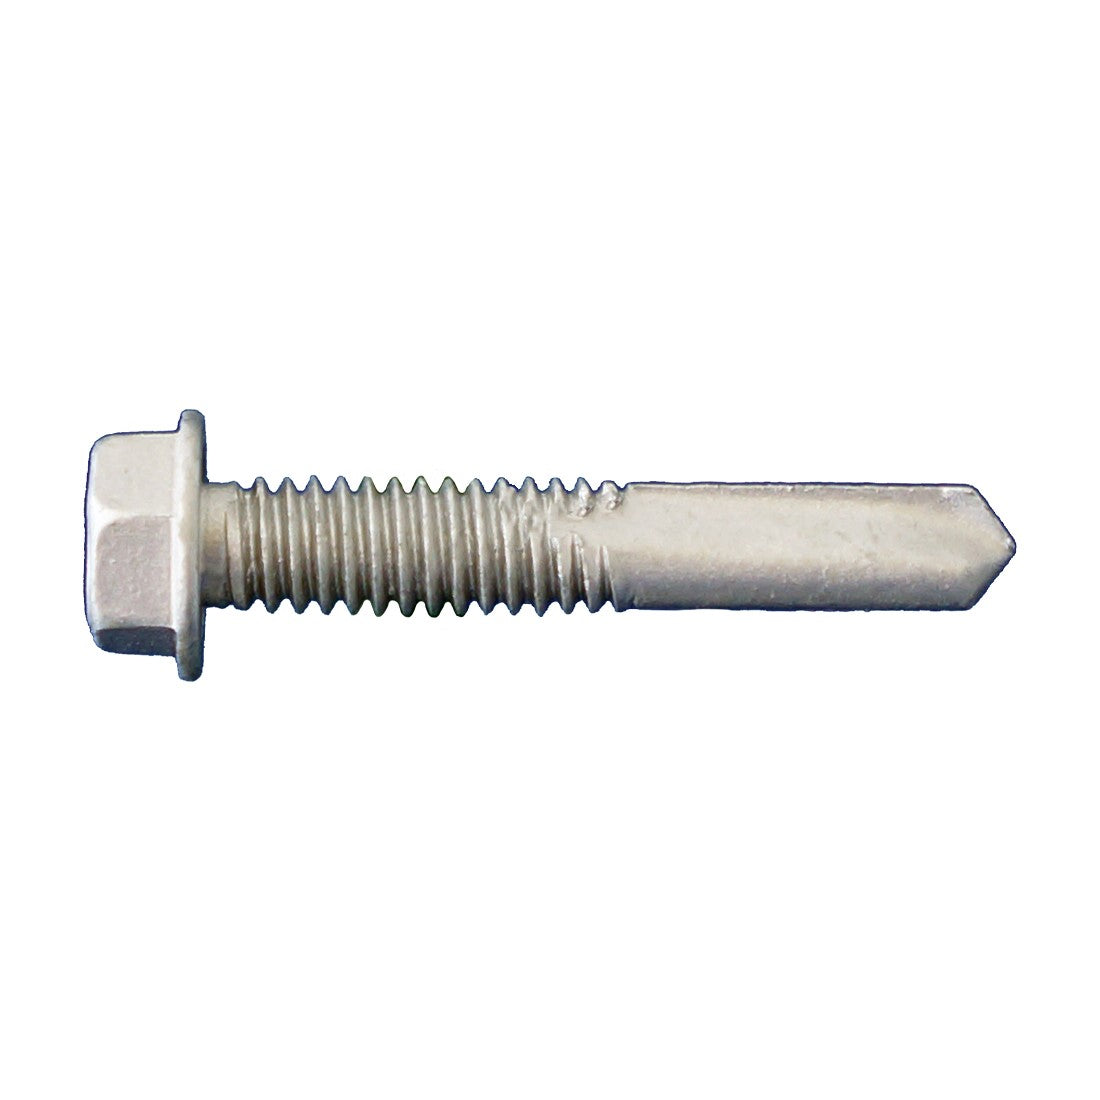 14 inch20 x 212 inch SelfDrilling Metal Screw w#5 Point Hex Head DaggerGuard Coating Pkg 1000